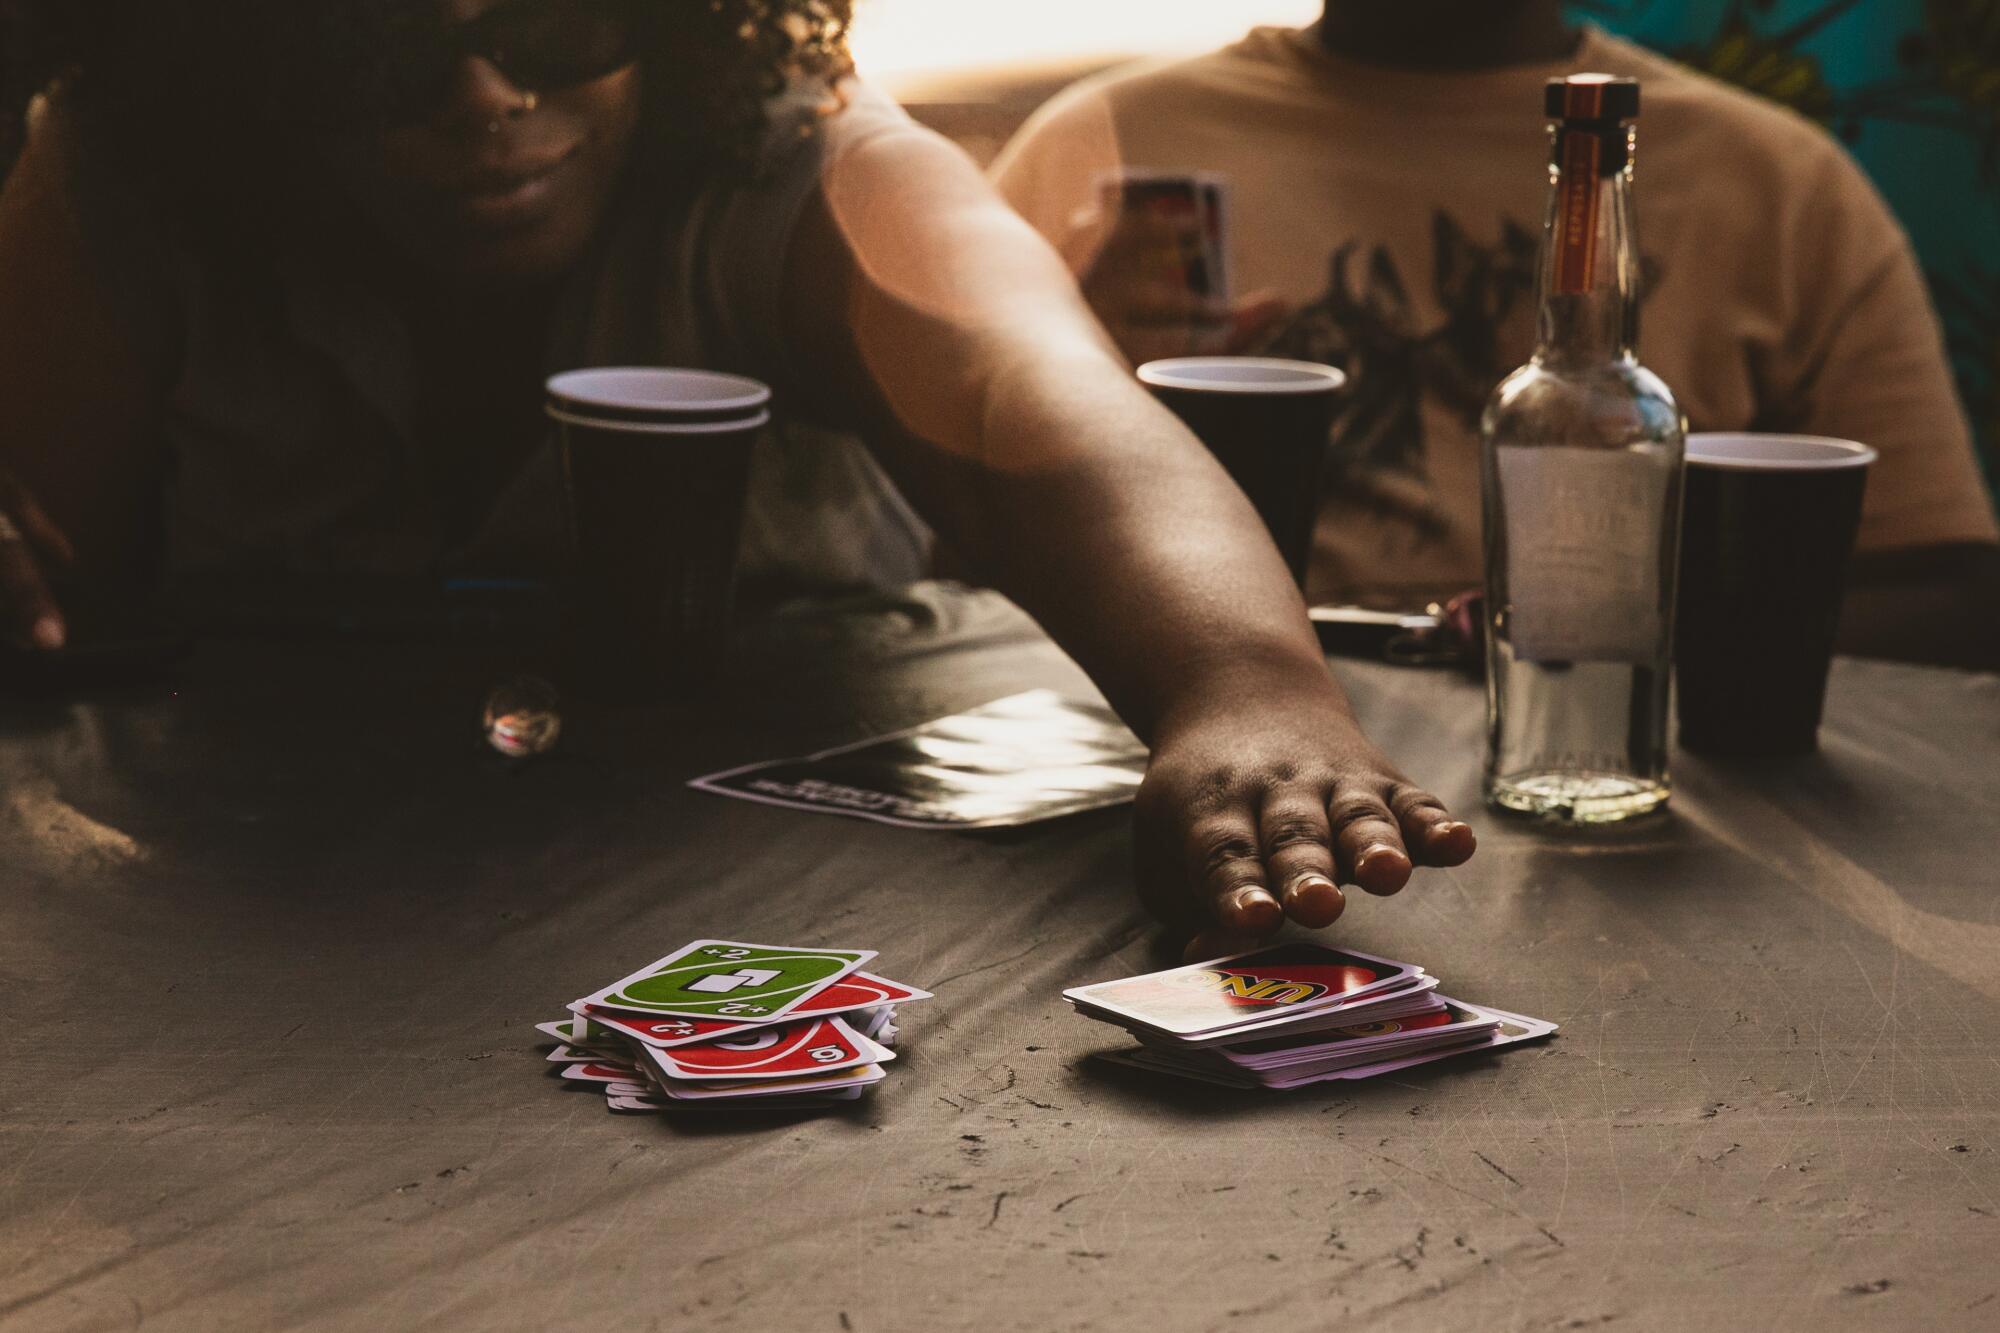 A hand reaches toward a pile of cards on a table.